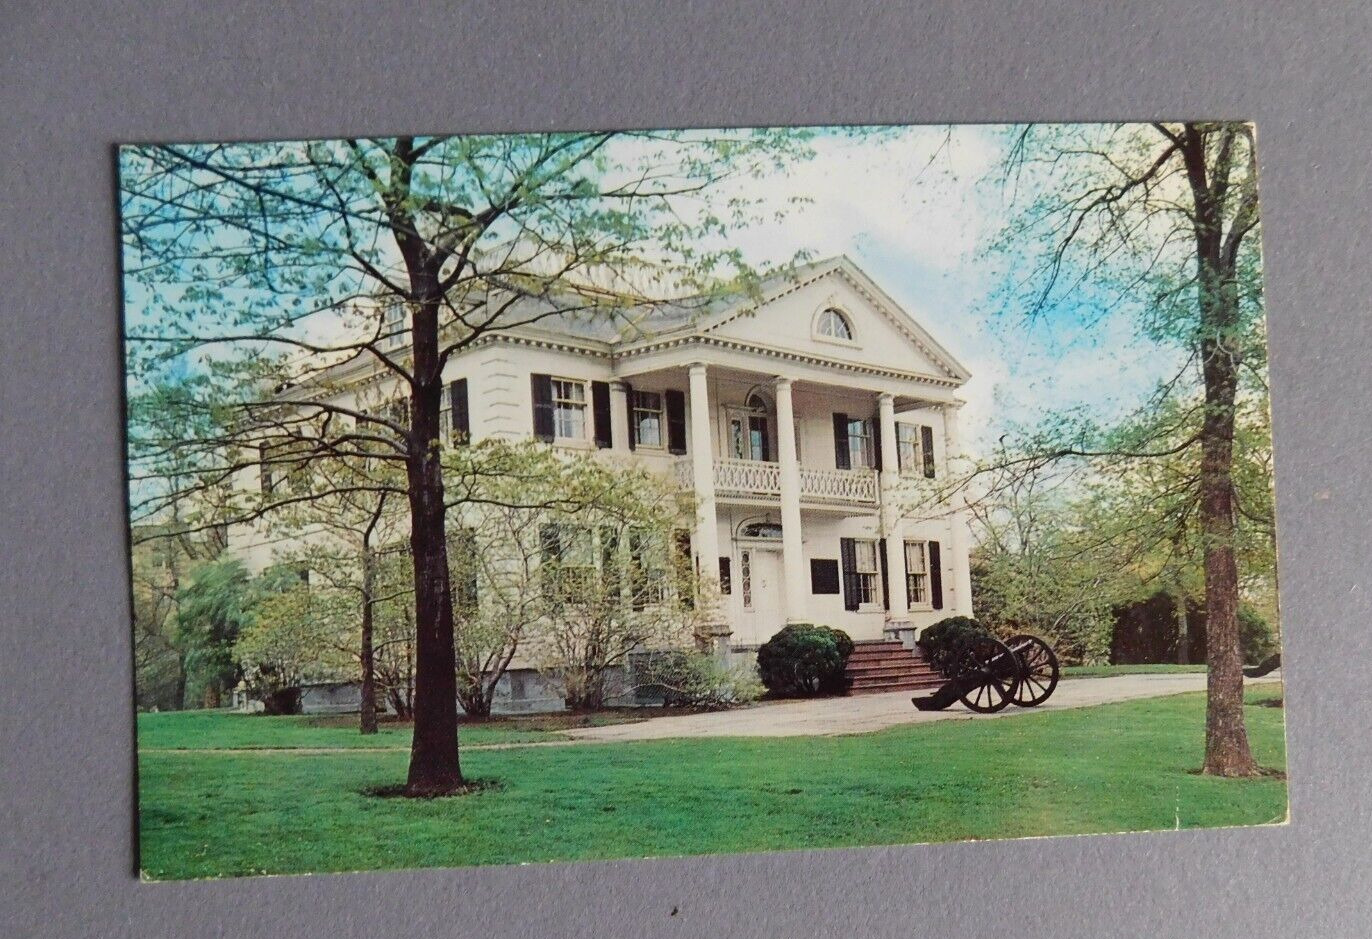 Roger Morris-Jumel Mansion: New York City - Postcard posted